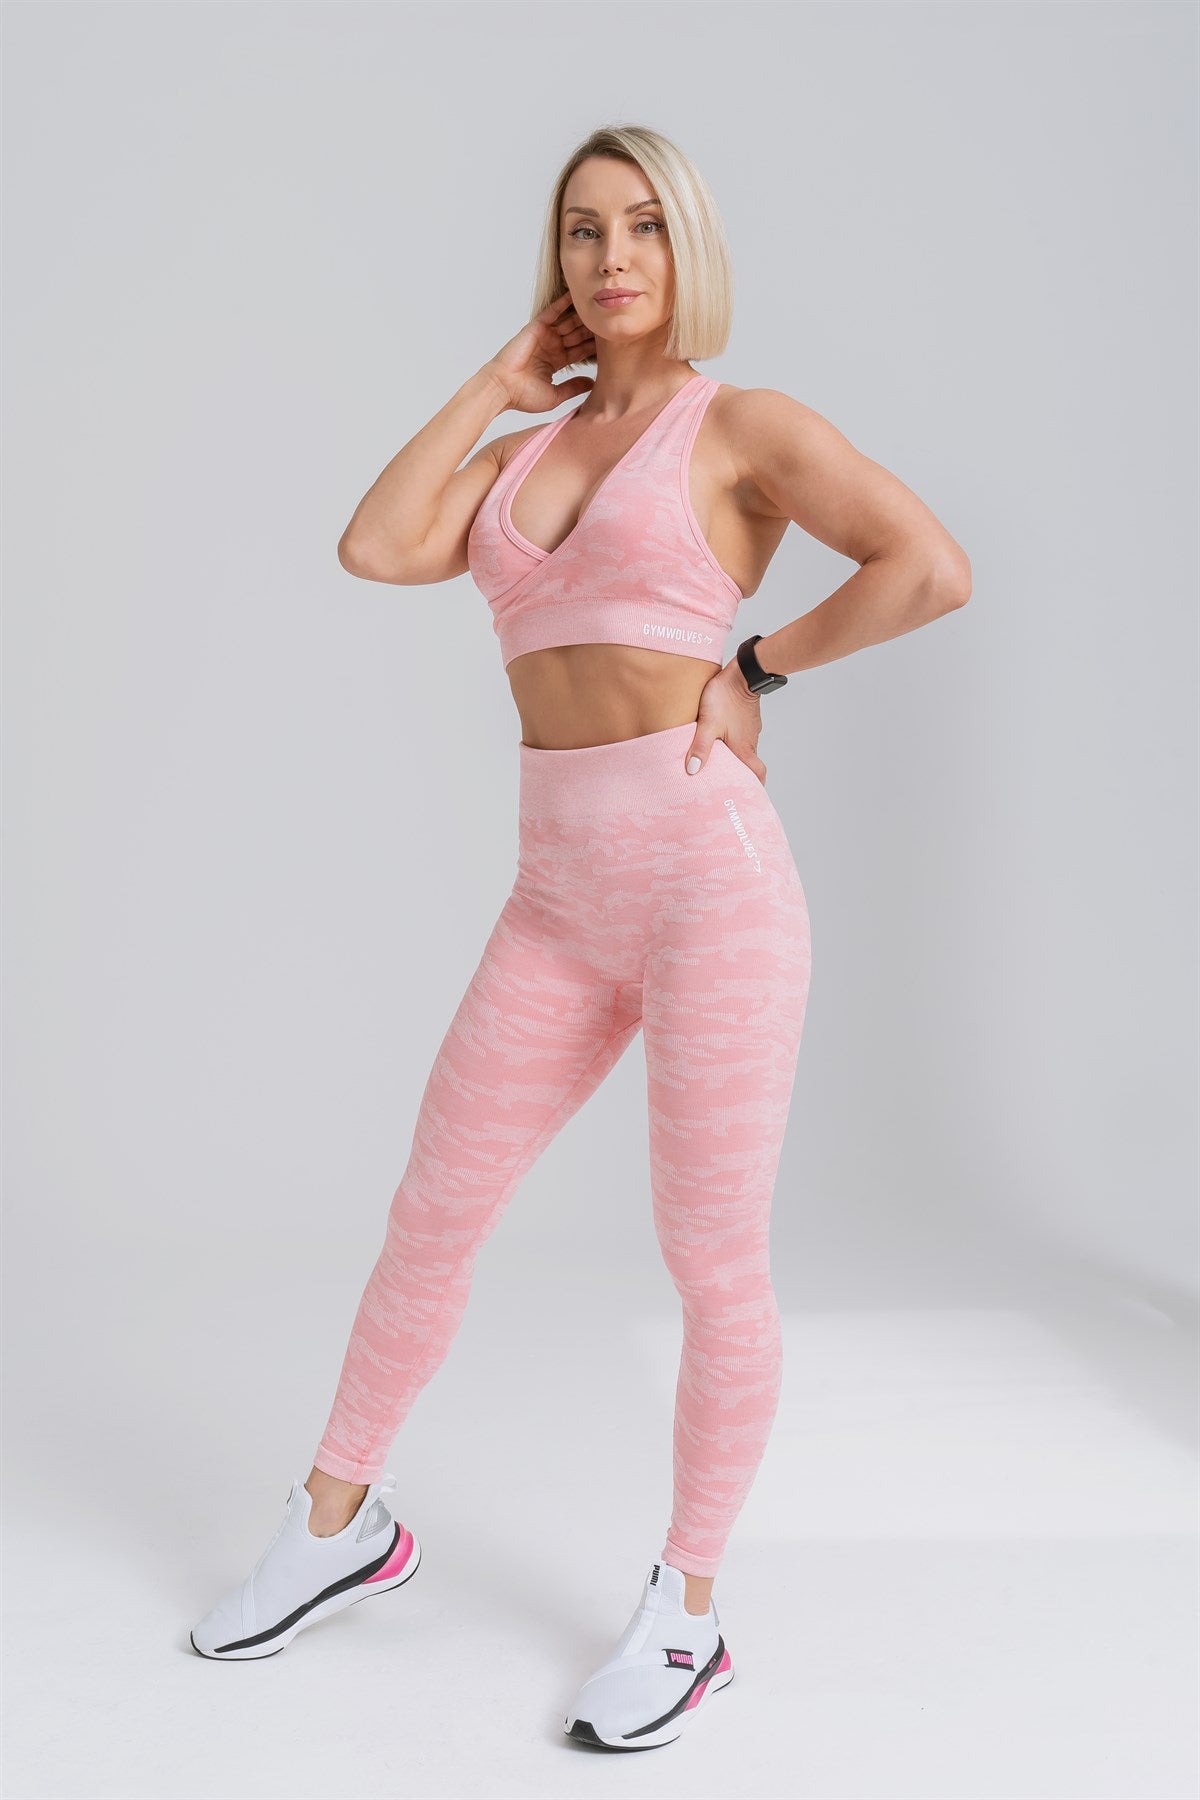 Gymwolves Women Seamles Sport Leggings Powder Pink  Camouflage Pattern  Action Series - Shakeproteine